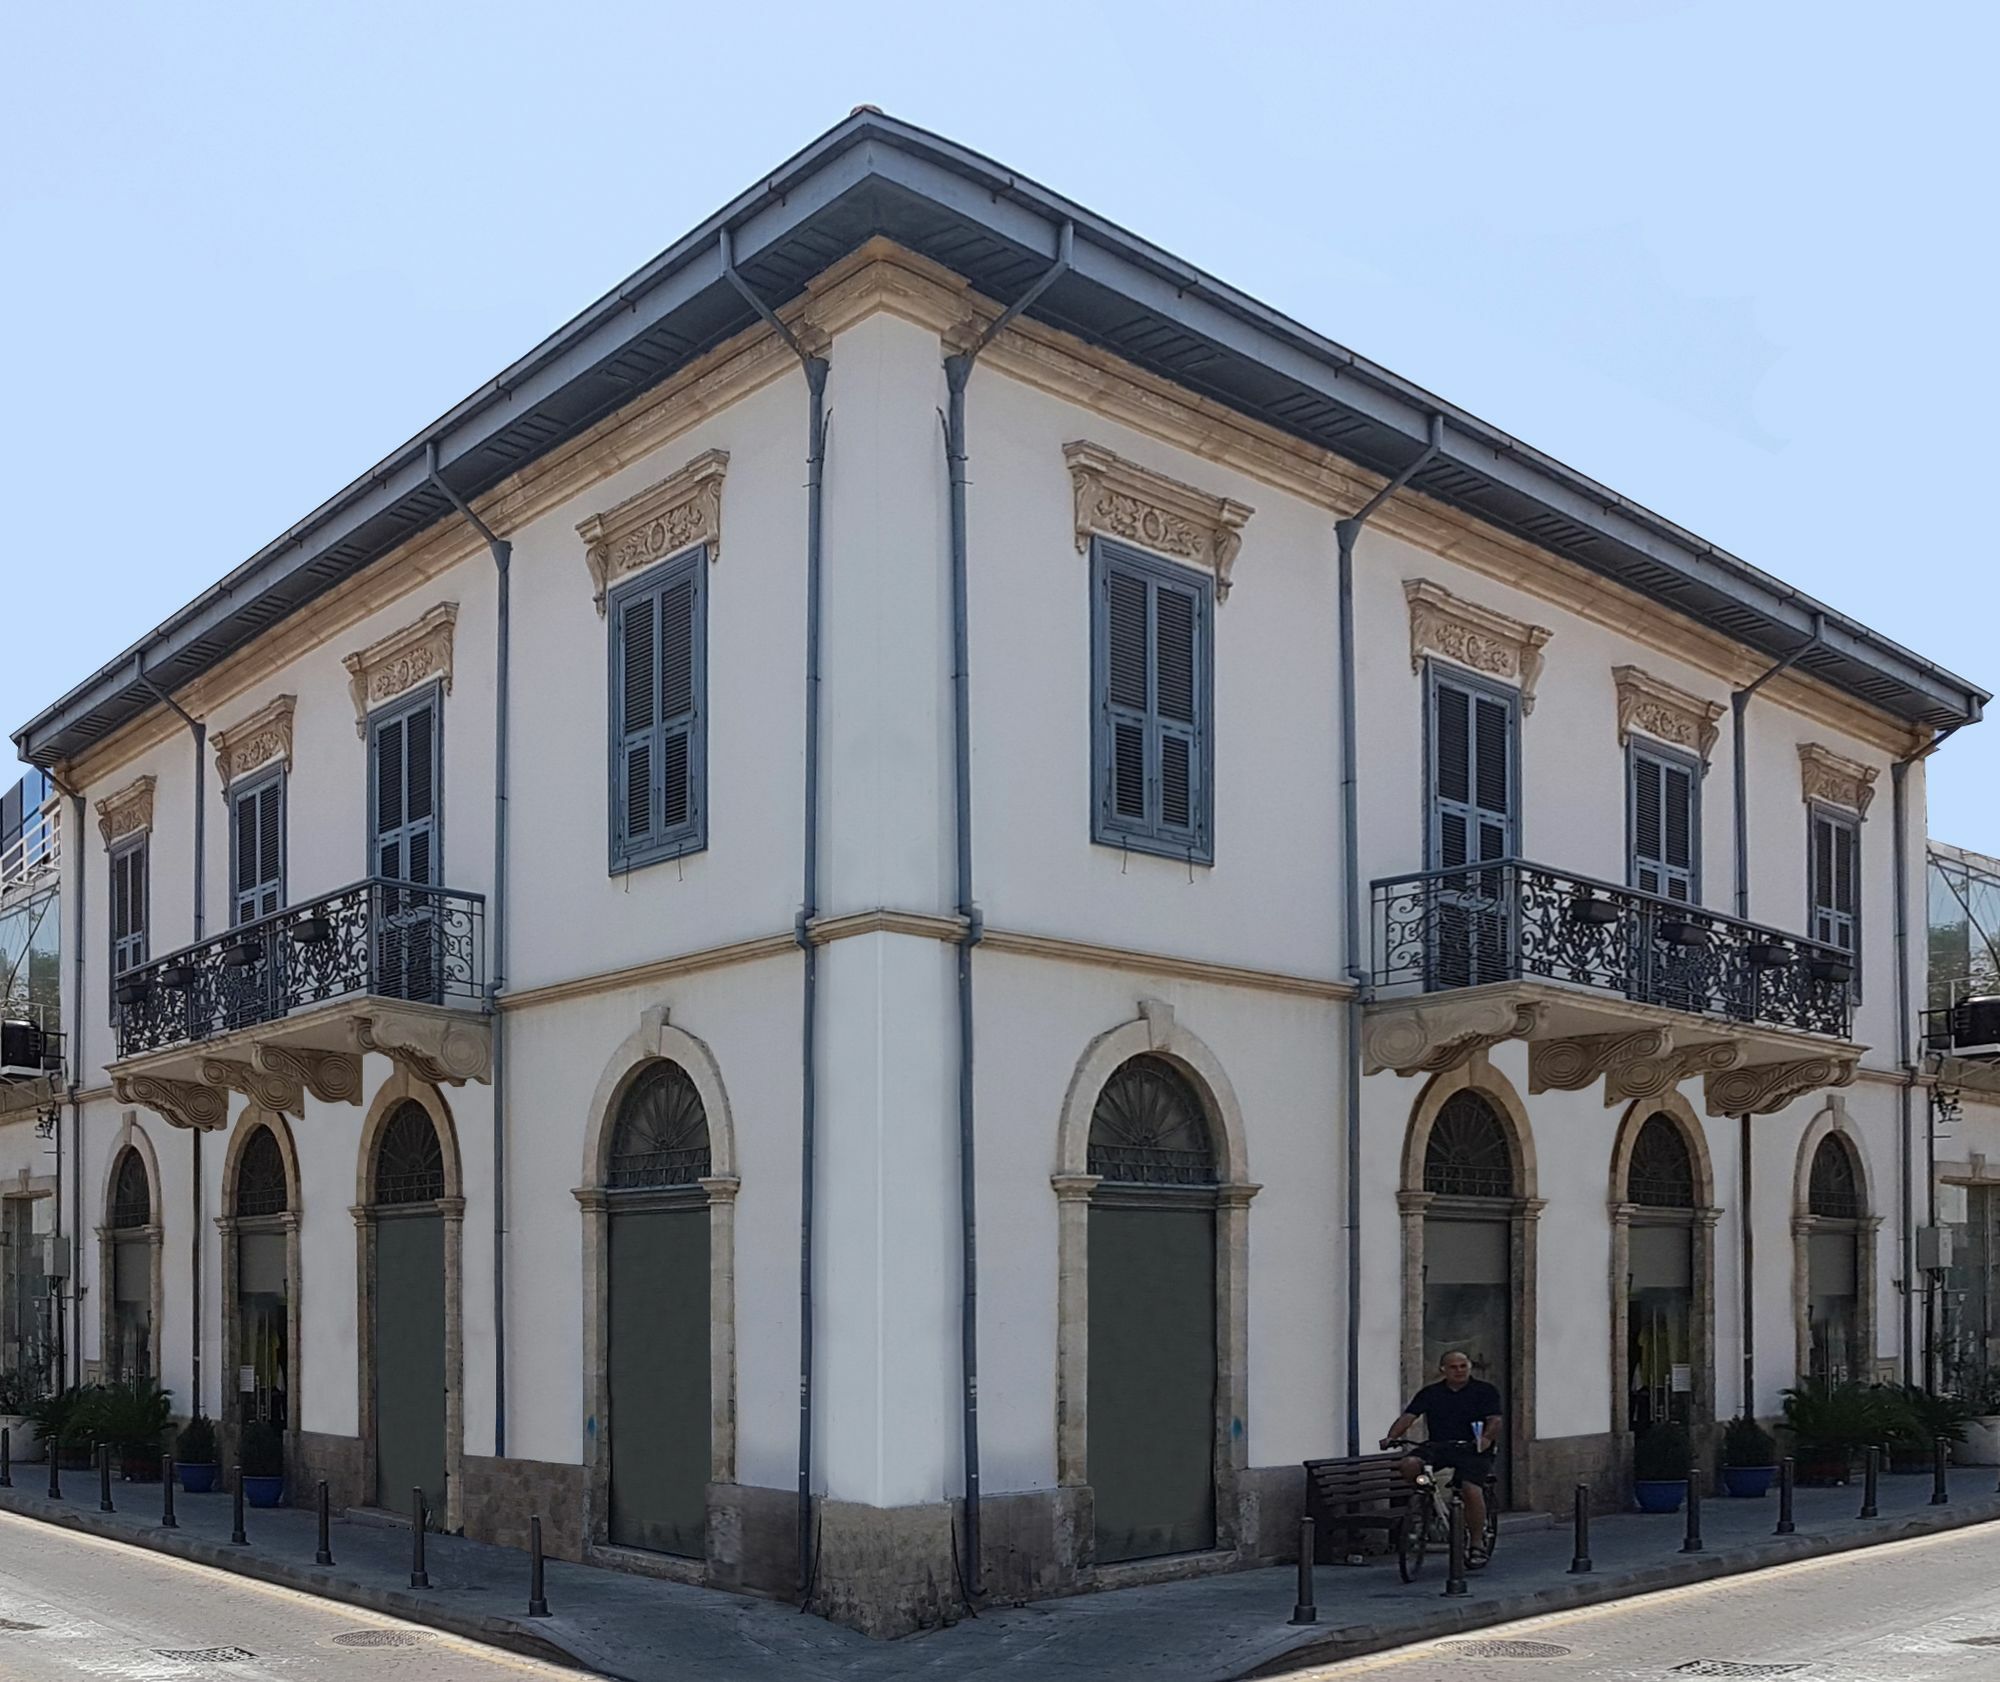 Limassol Old Town Mansion Ξενοδοχείο Εξωτερικό φωτογραφία